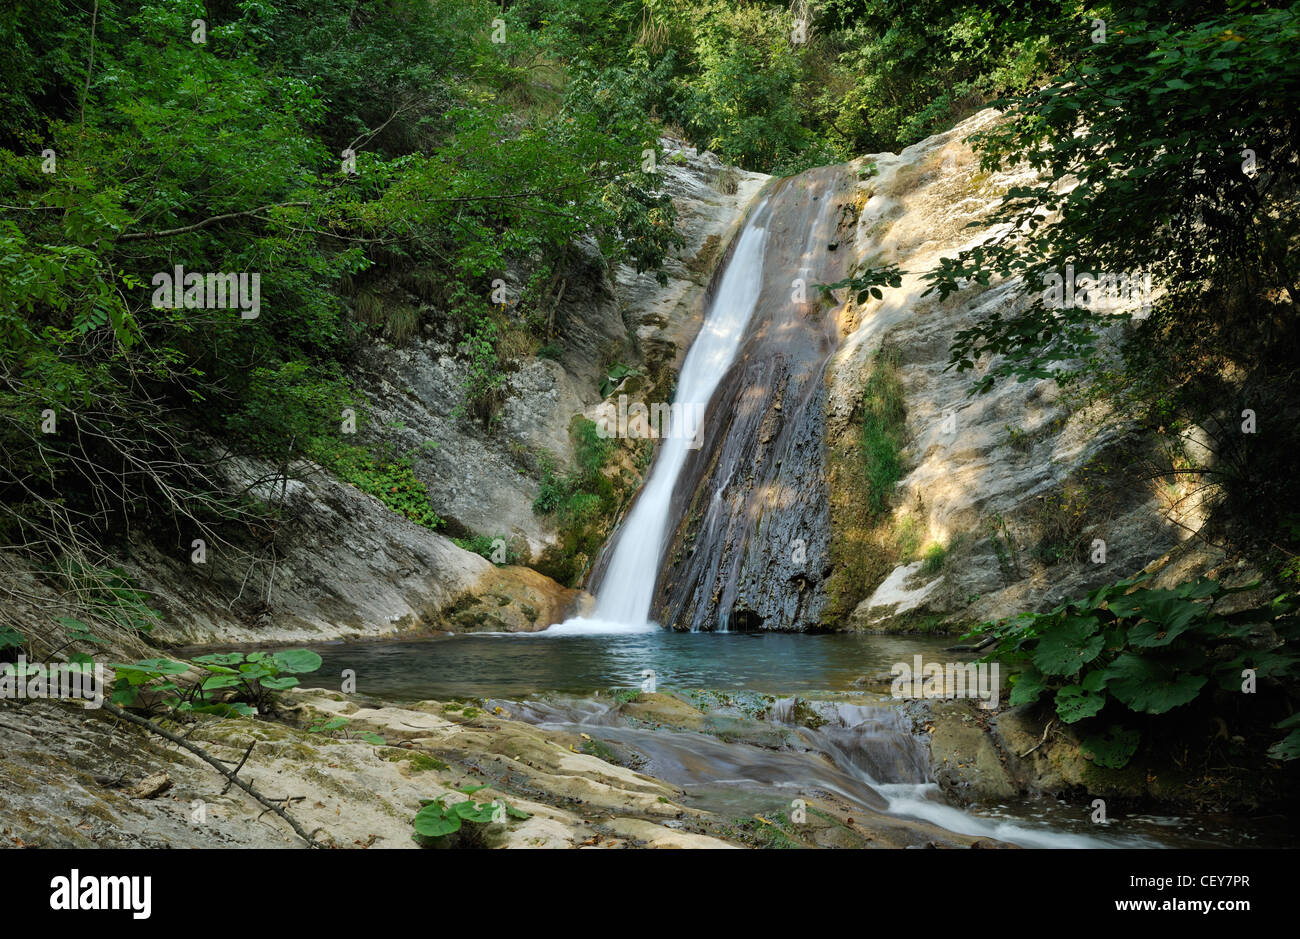 Wasserfall am kleinen Bach im grünen Sommer Wald Stockfoto